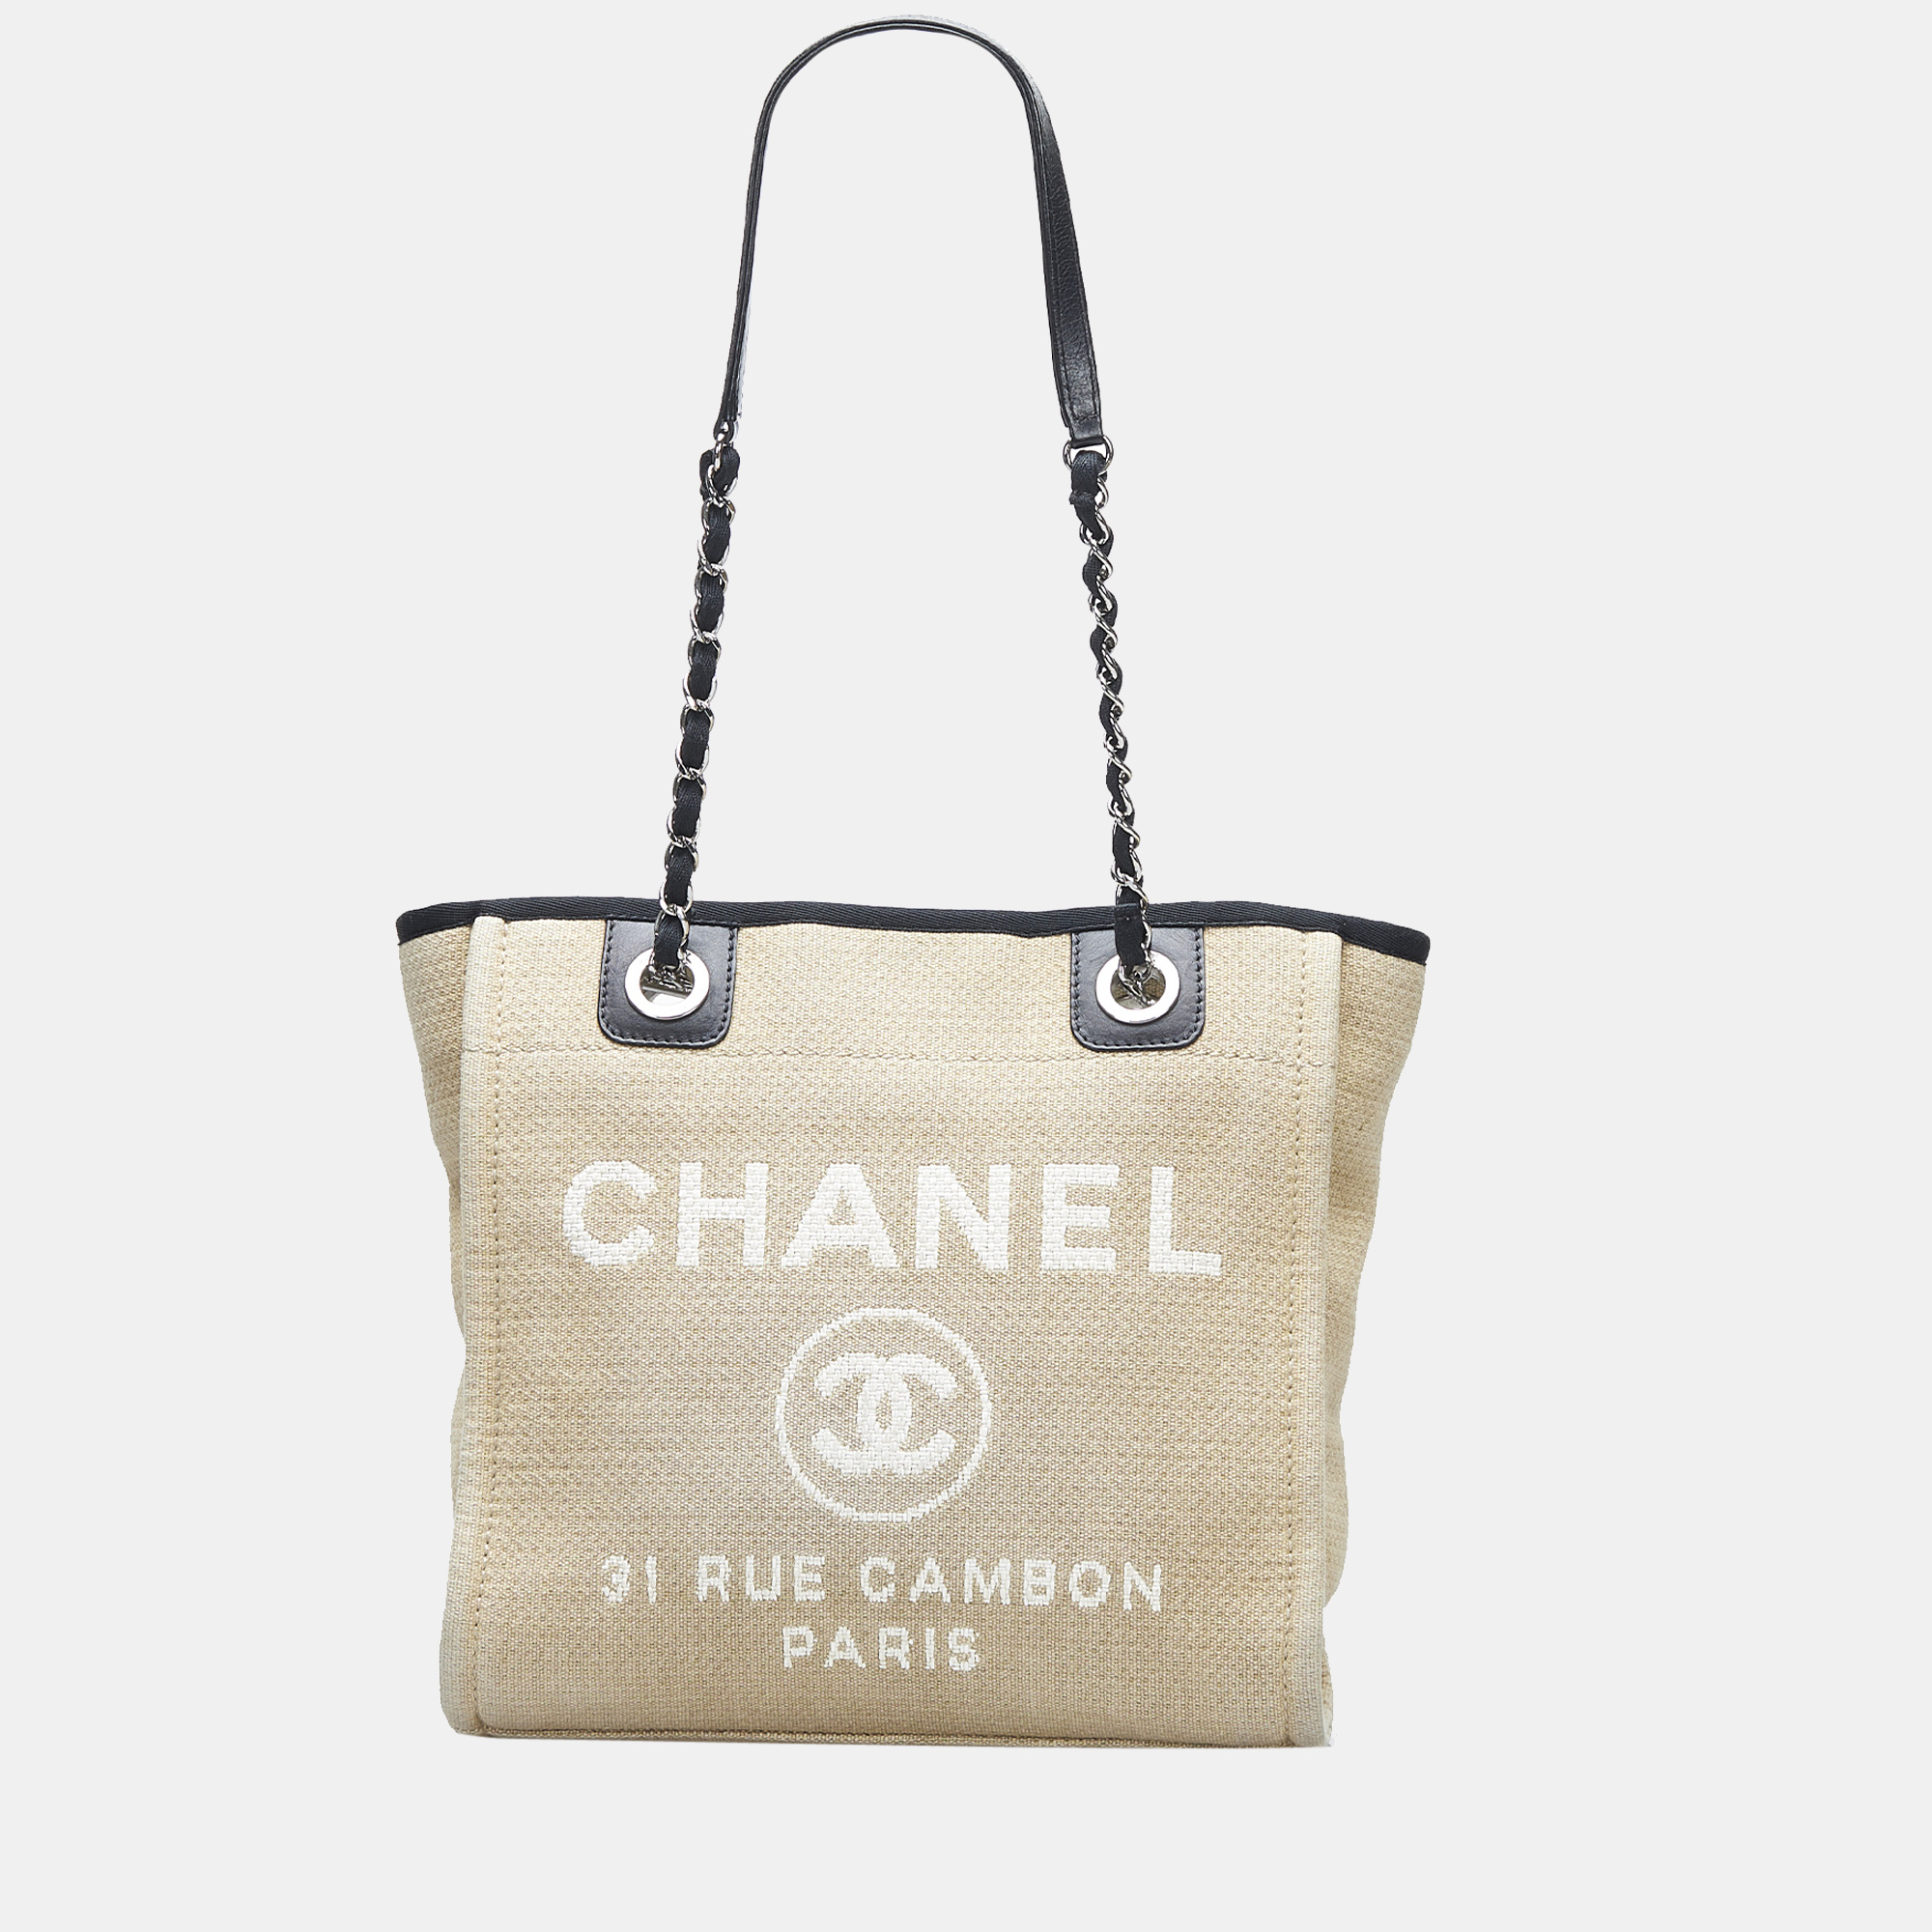 Chanel Beige/Brown Mini Deauville Tote Bag